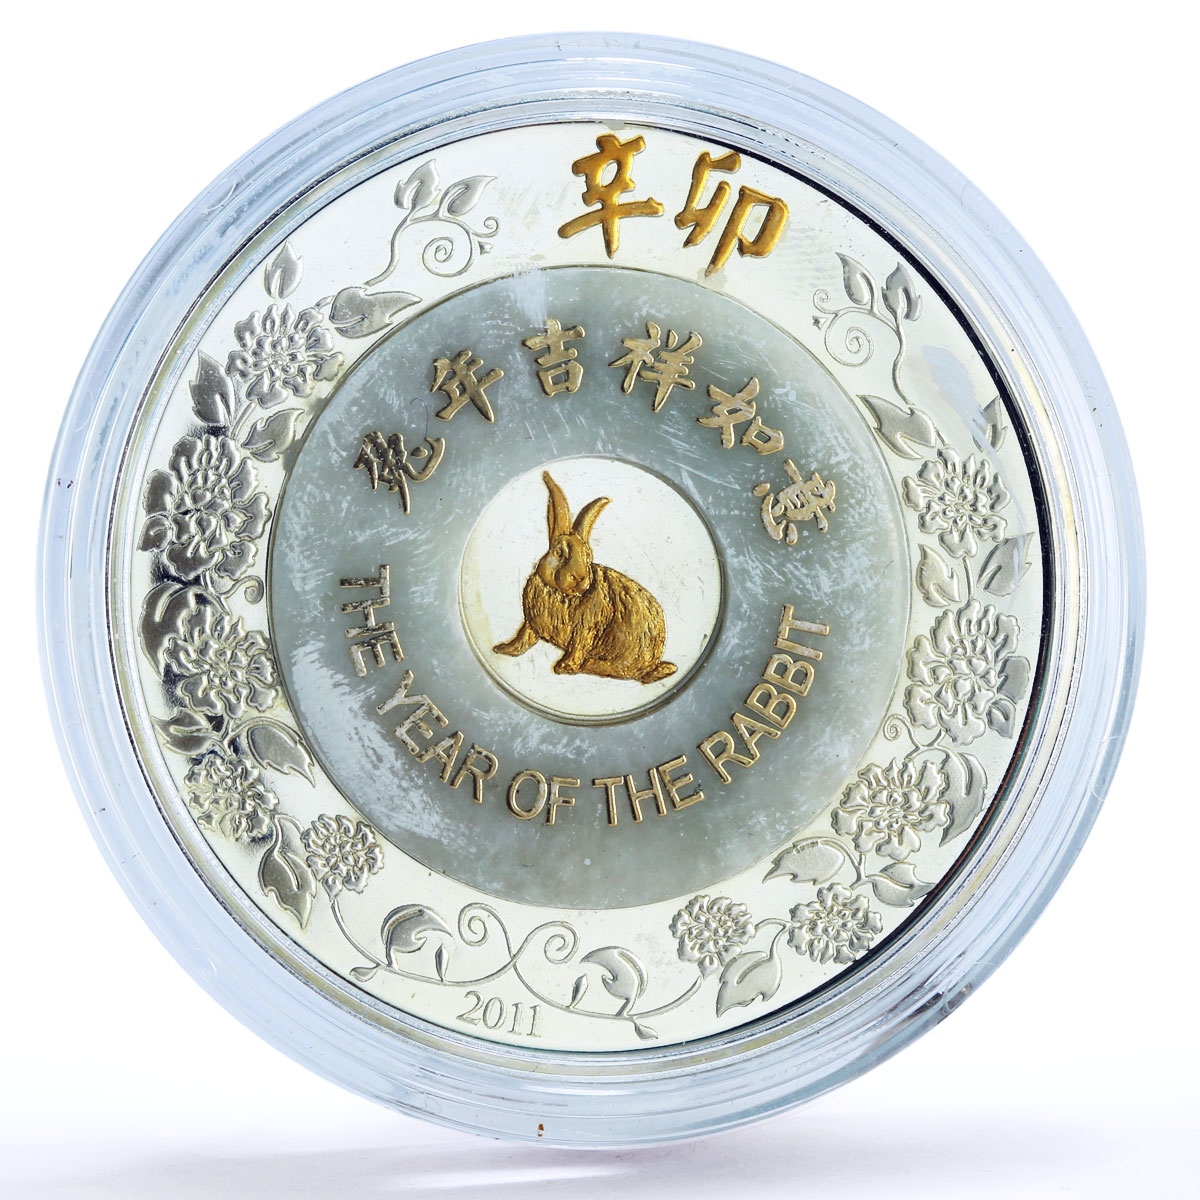 Laos 2000 kip Lunar Calendar Year of the Rabbit proof gilded silver coin 2011